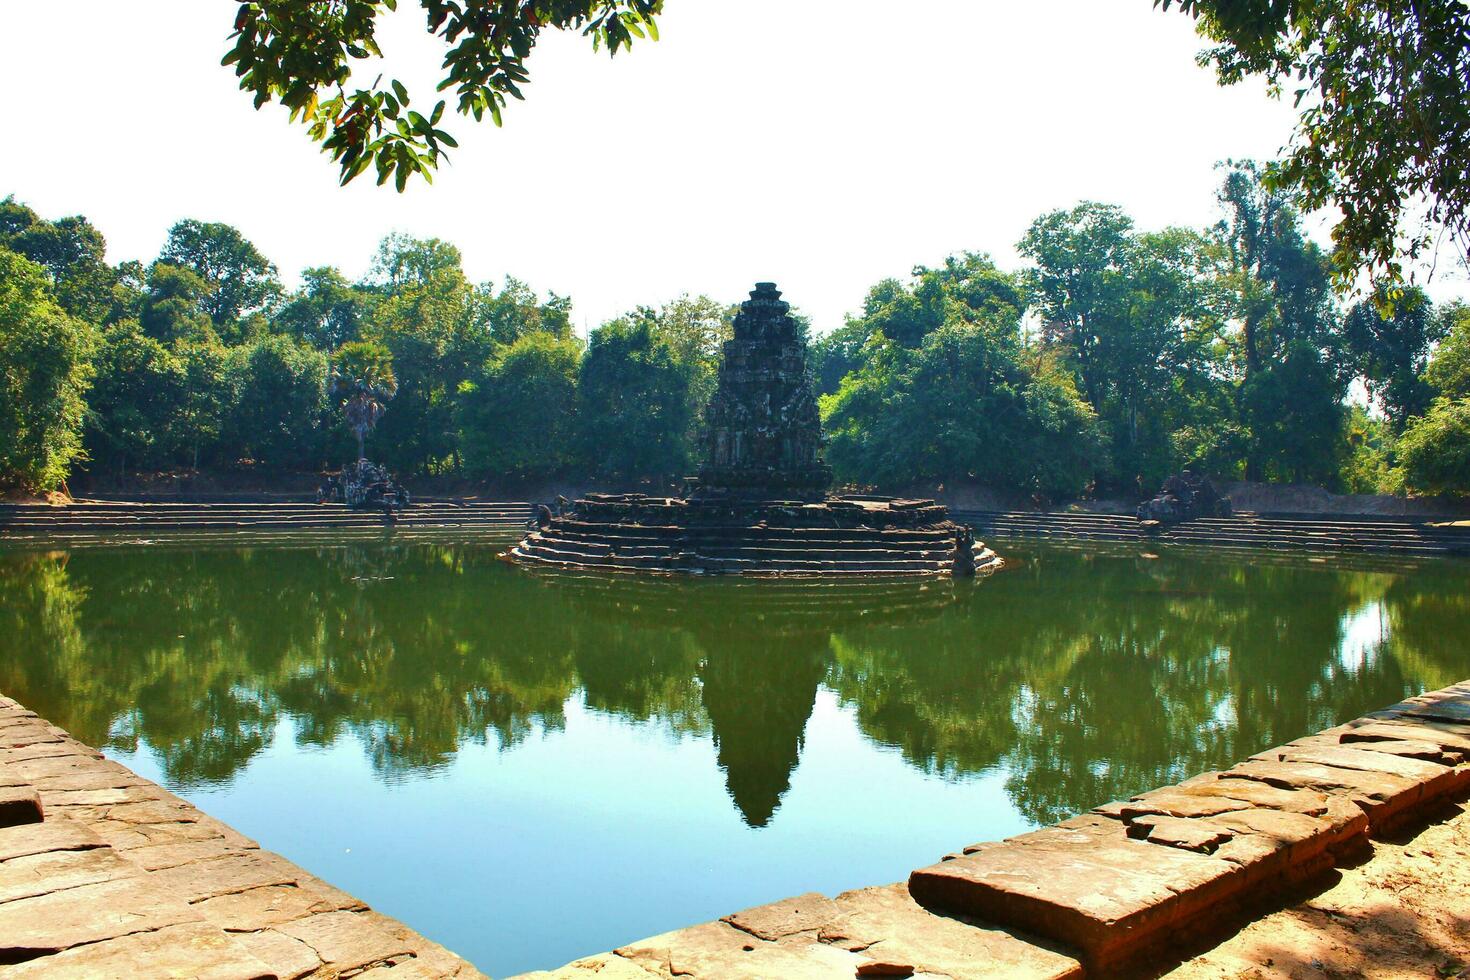 Angkor wat Tempel, Kambodscha foto